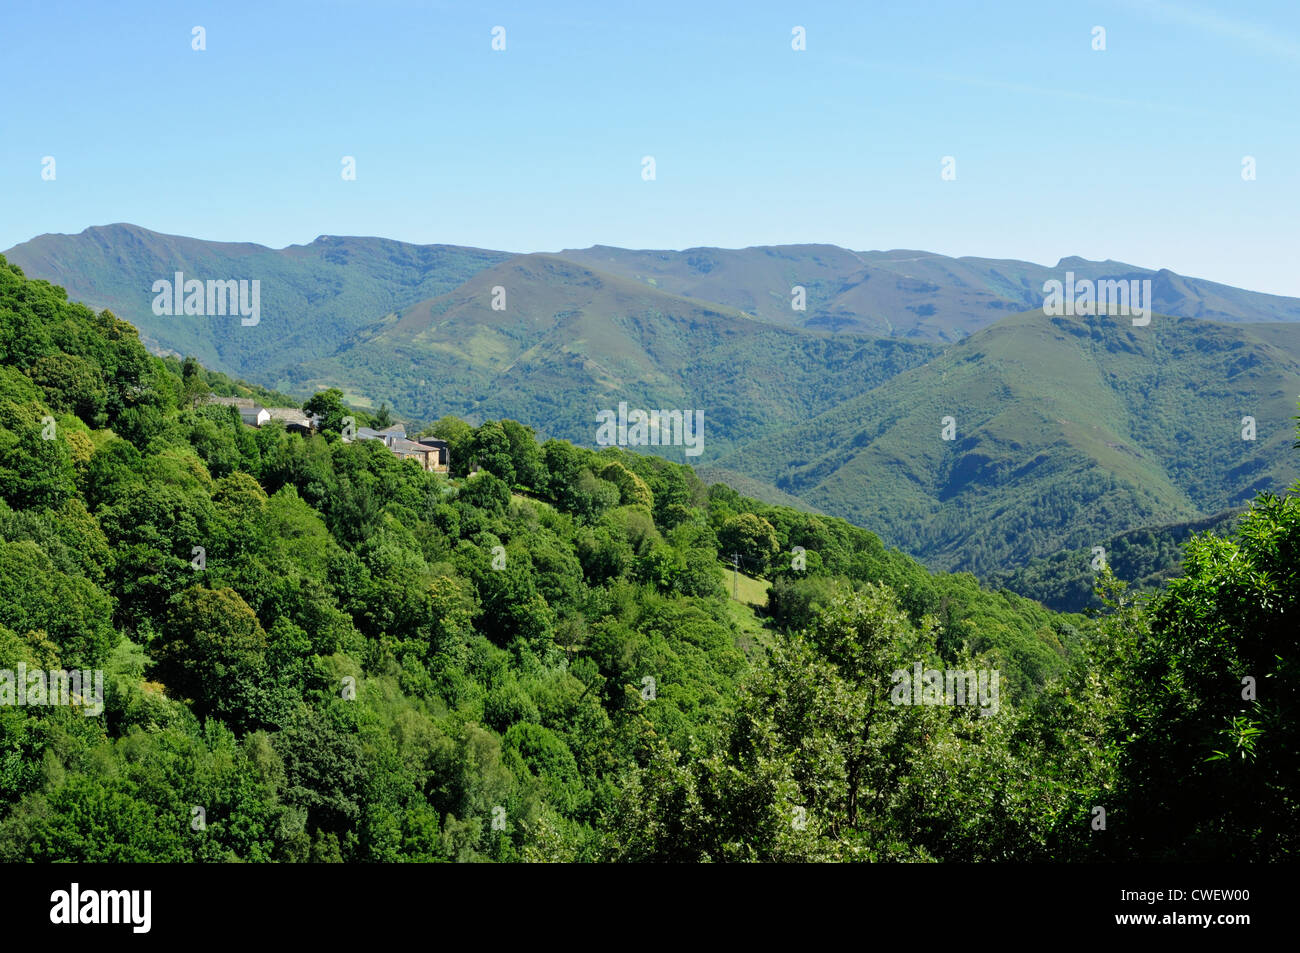 Village of Meiraos and landscape of the Courel mountain range. Lugo, Galicia, Spain Stock Photo